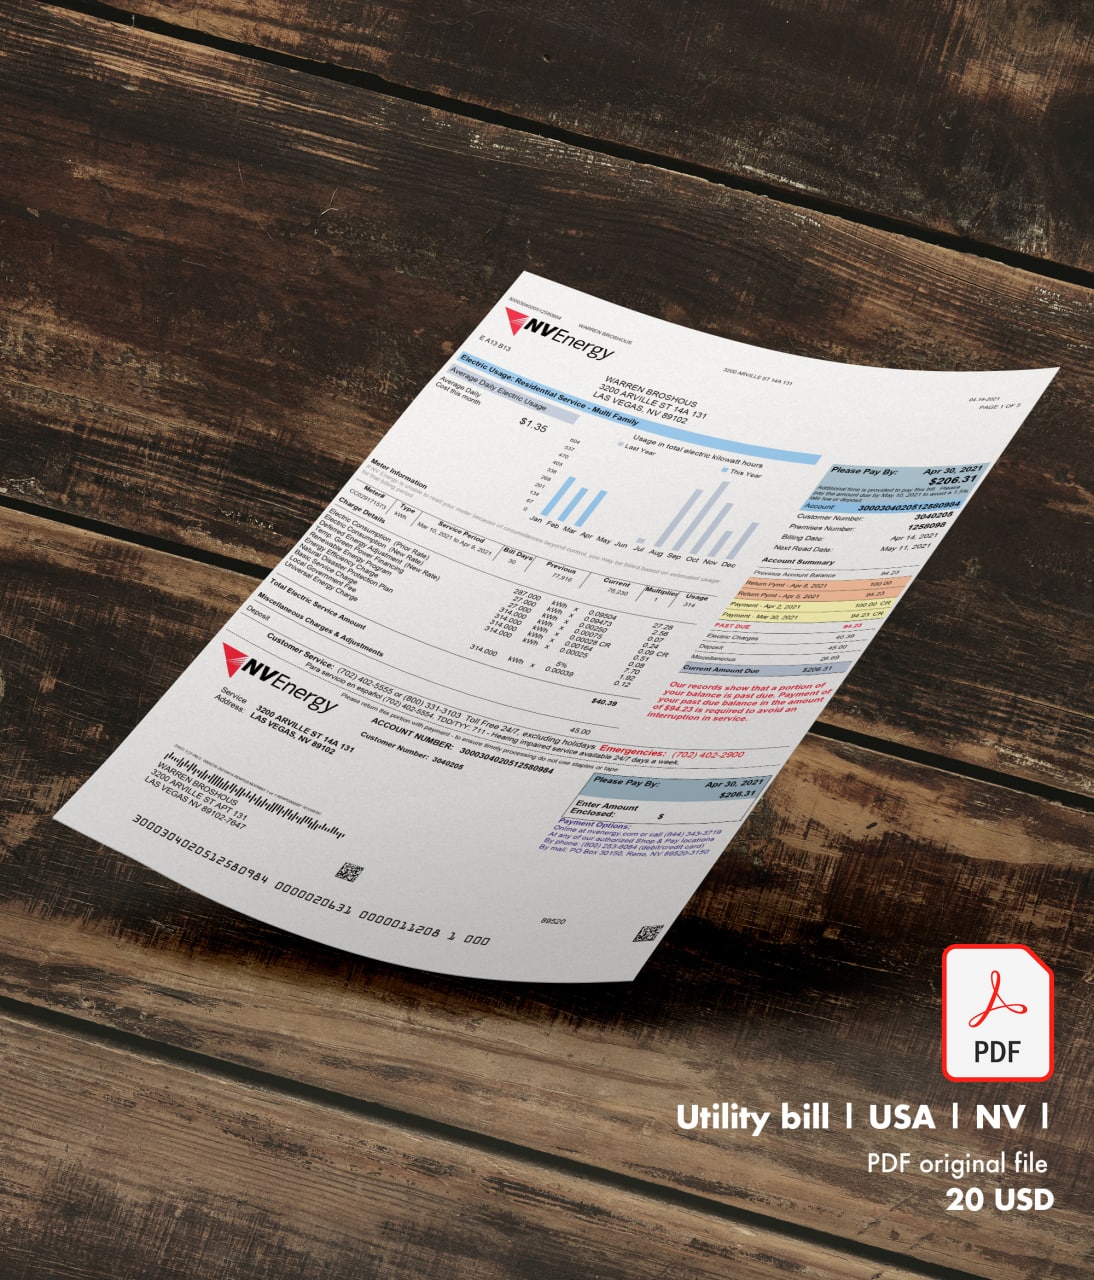 Utility bill | NVenergy | USA | NV-0